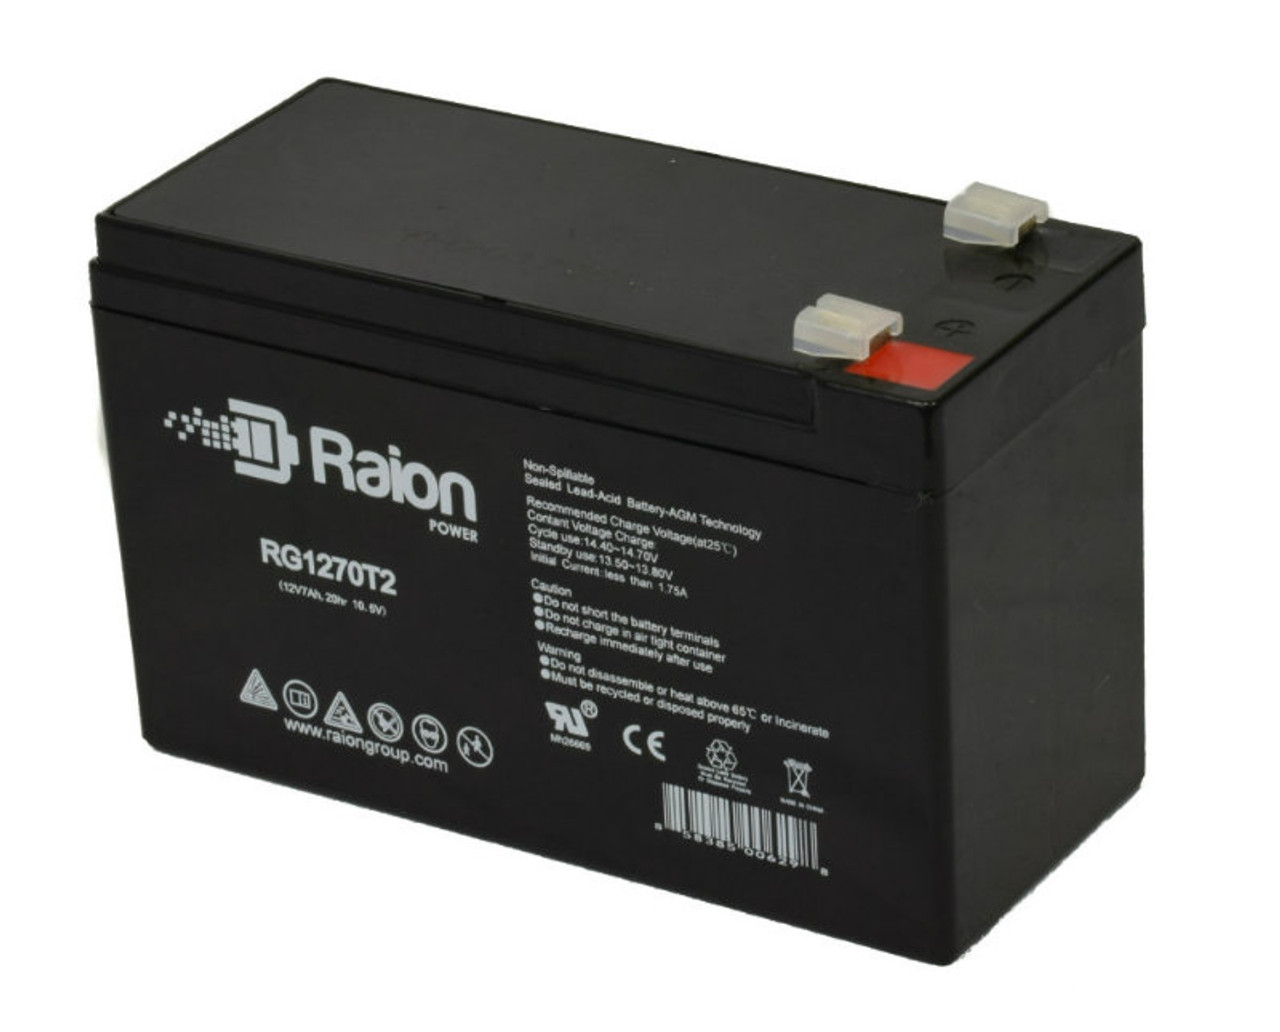 Raion Power RG1270T1 12V 7Ah Non-Spillable Replacement Battery for OEC-Diasonics Power Unit Model 85